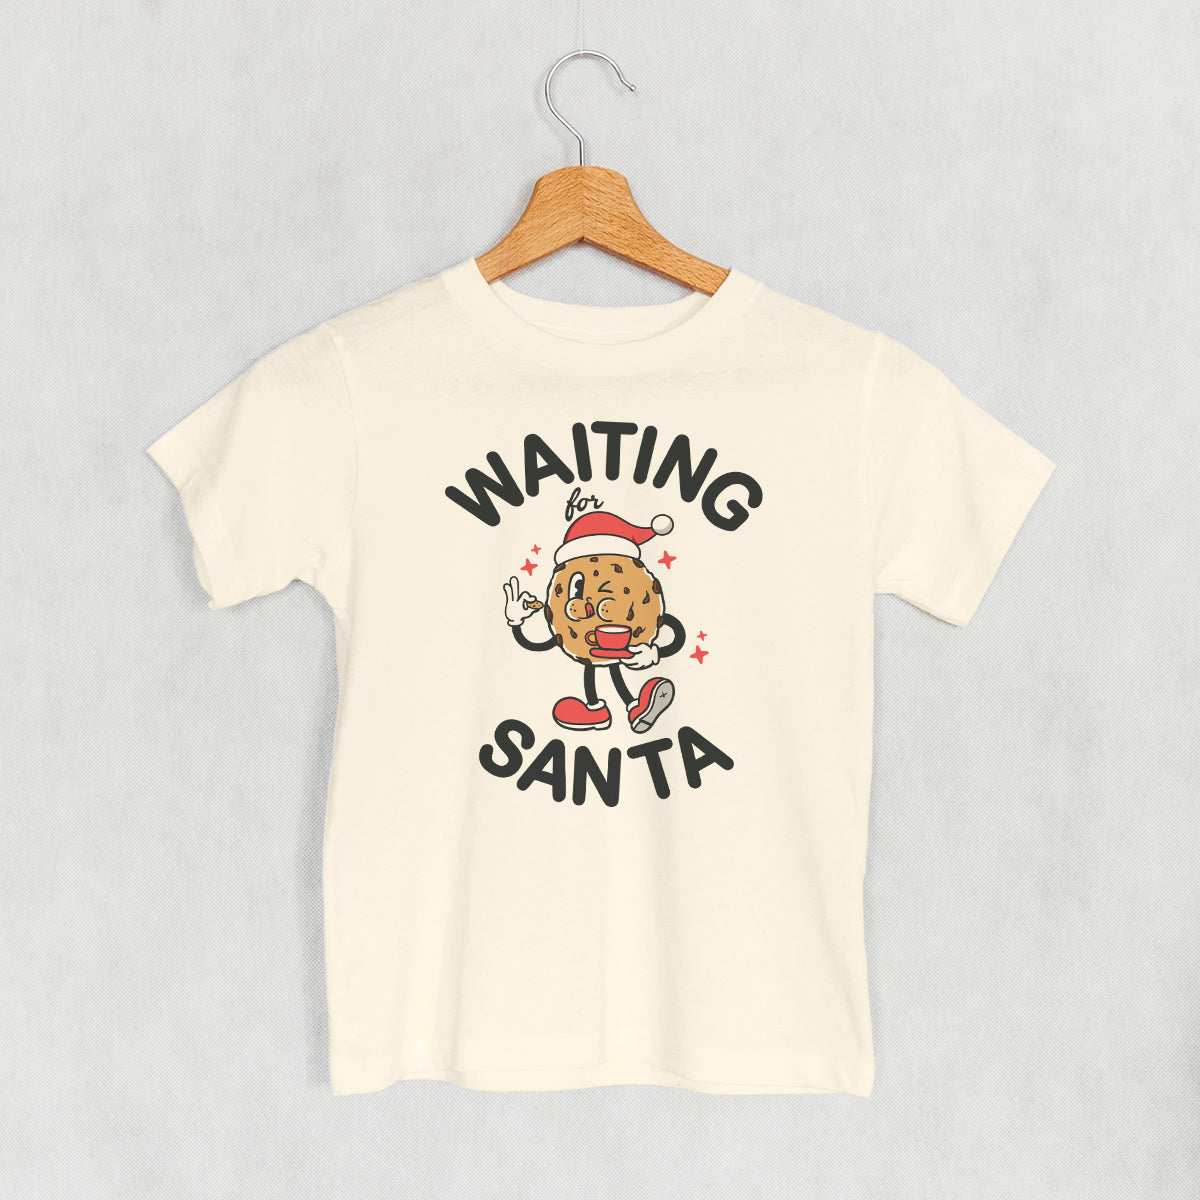 Waiting For Santa (Kids)